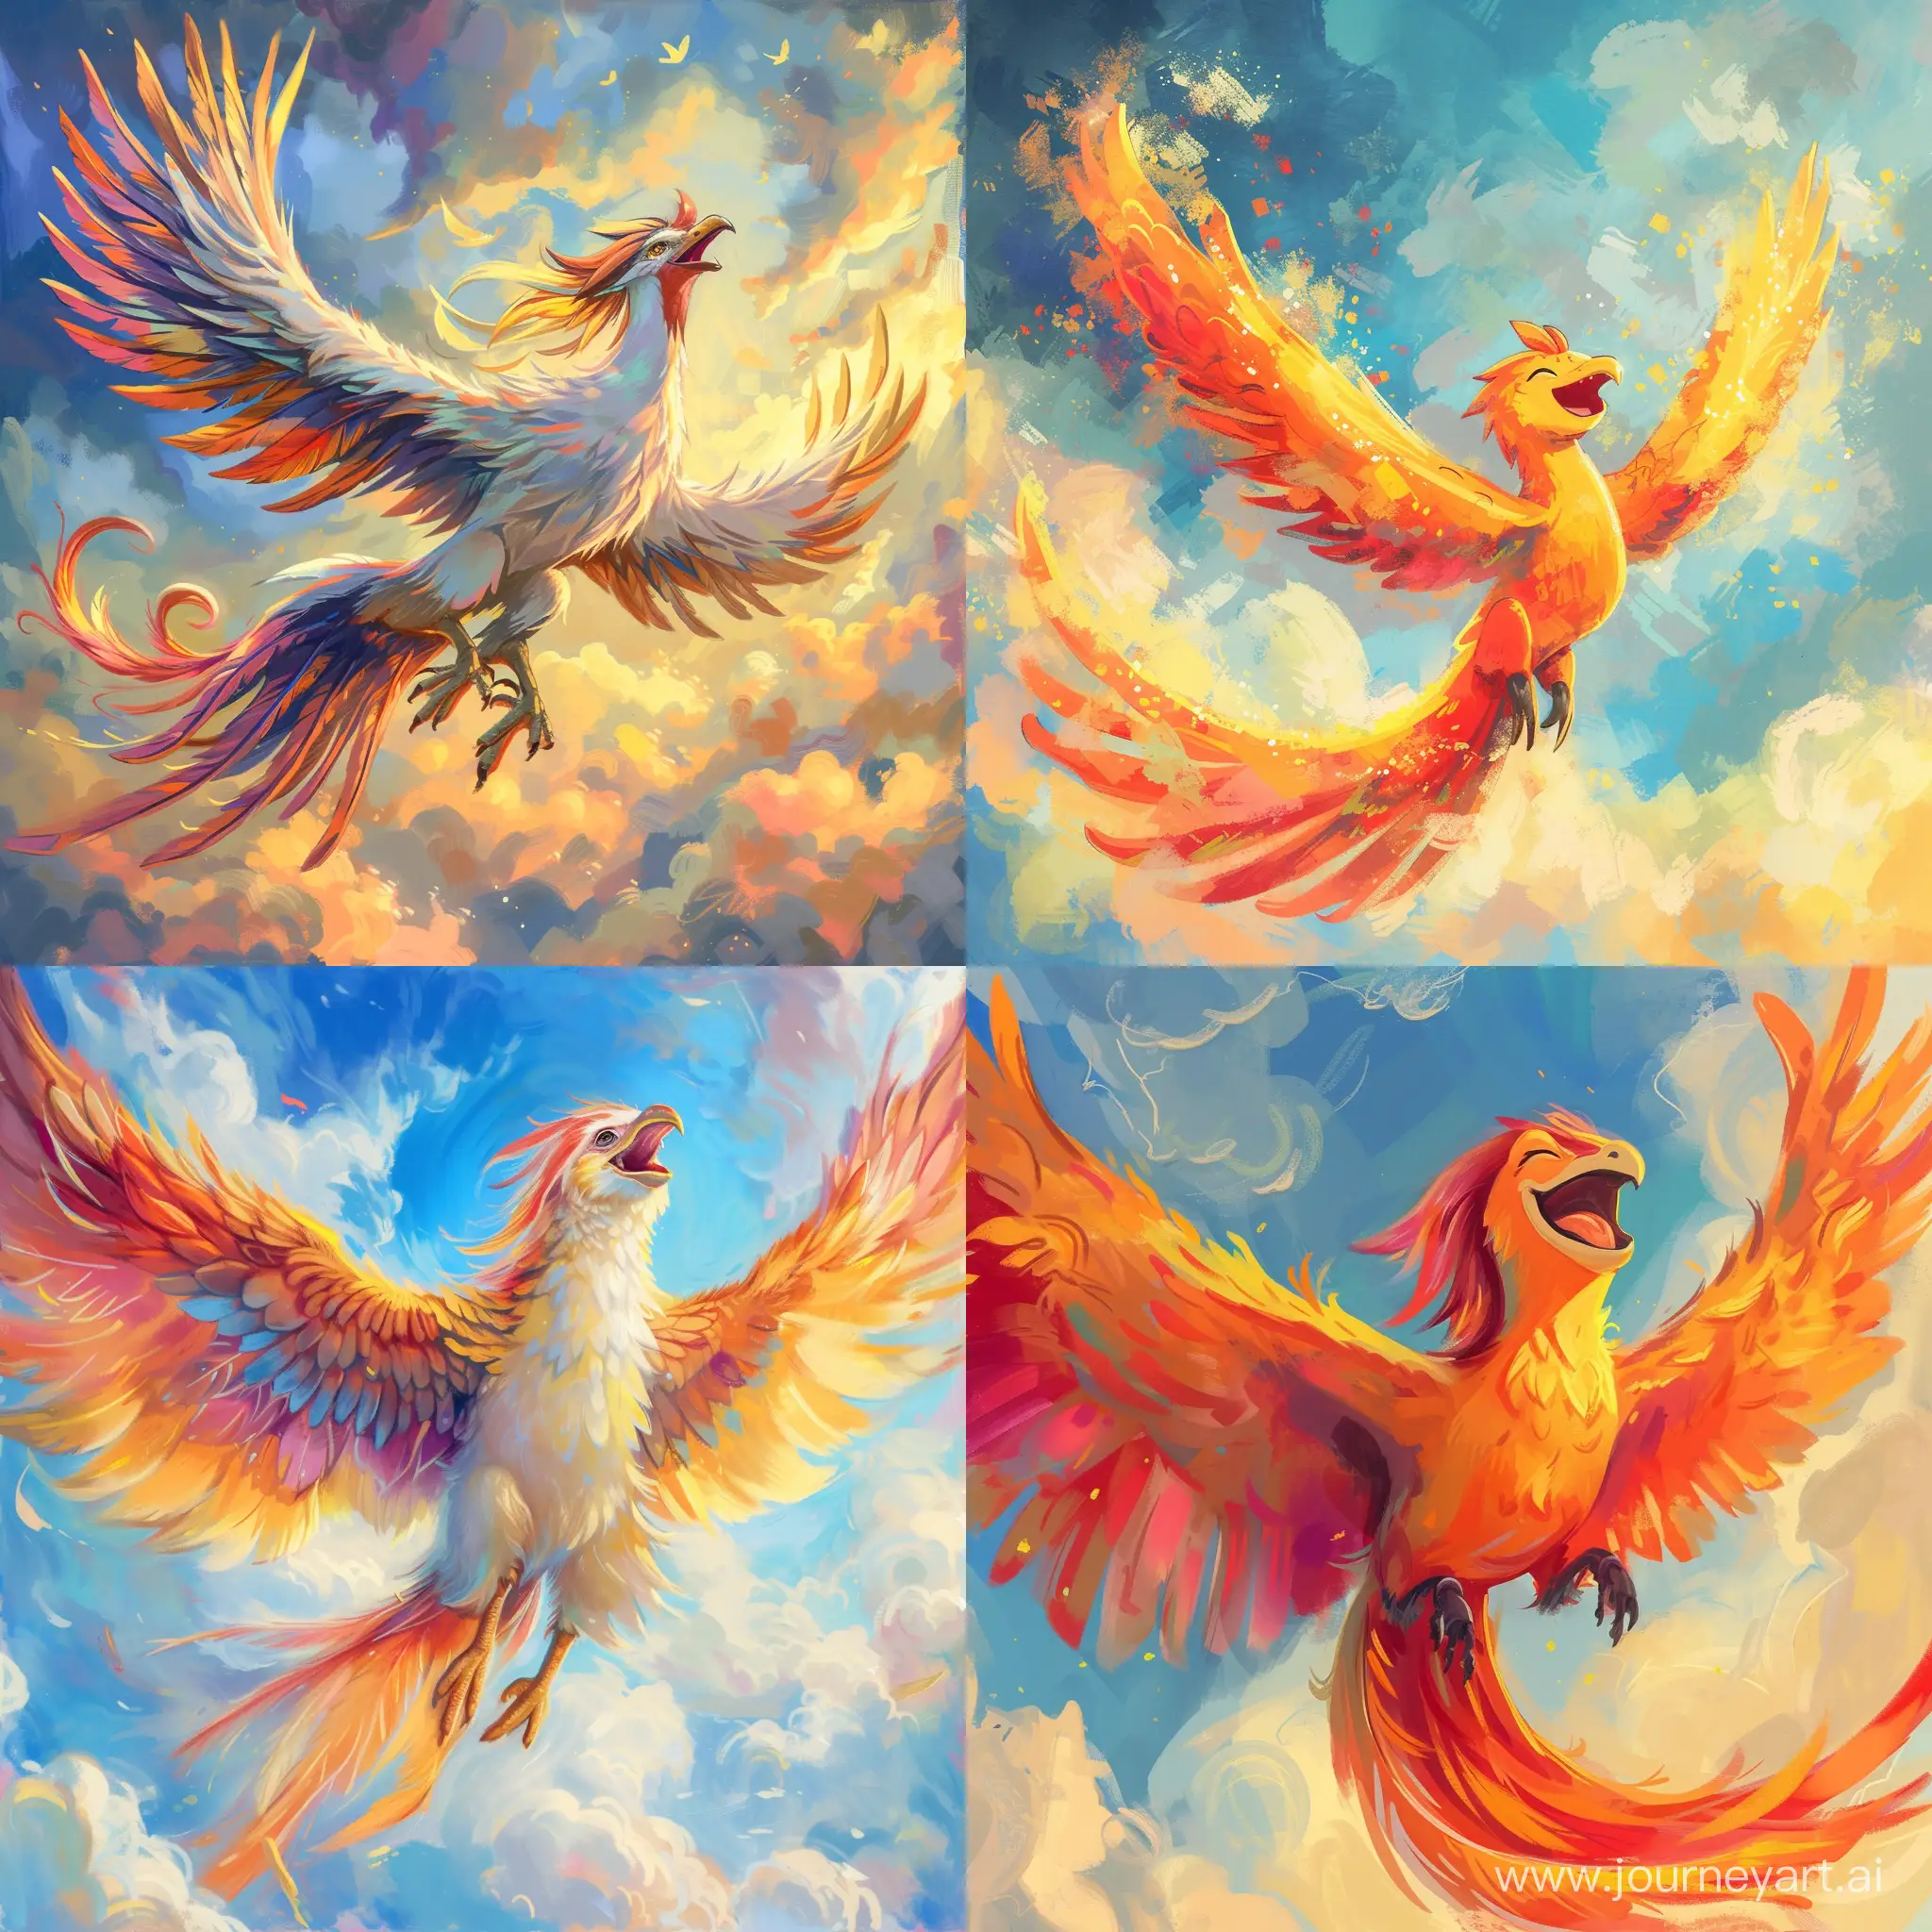 Joyful-Phoenix-Soaring-into-the-Colorful-Skies-after-Nirvana